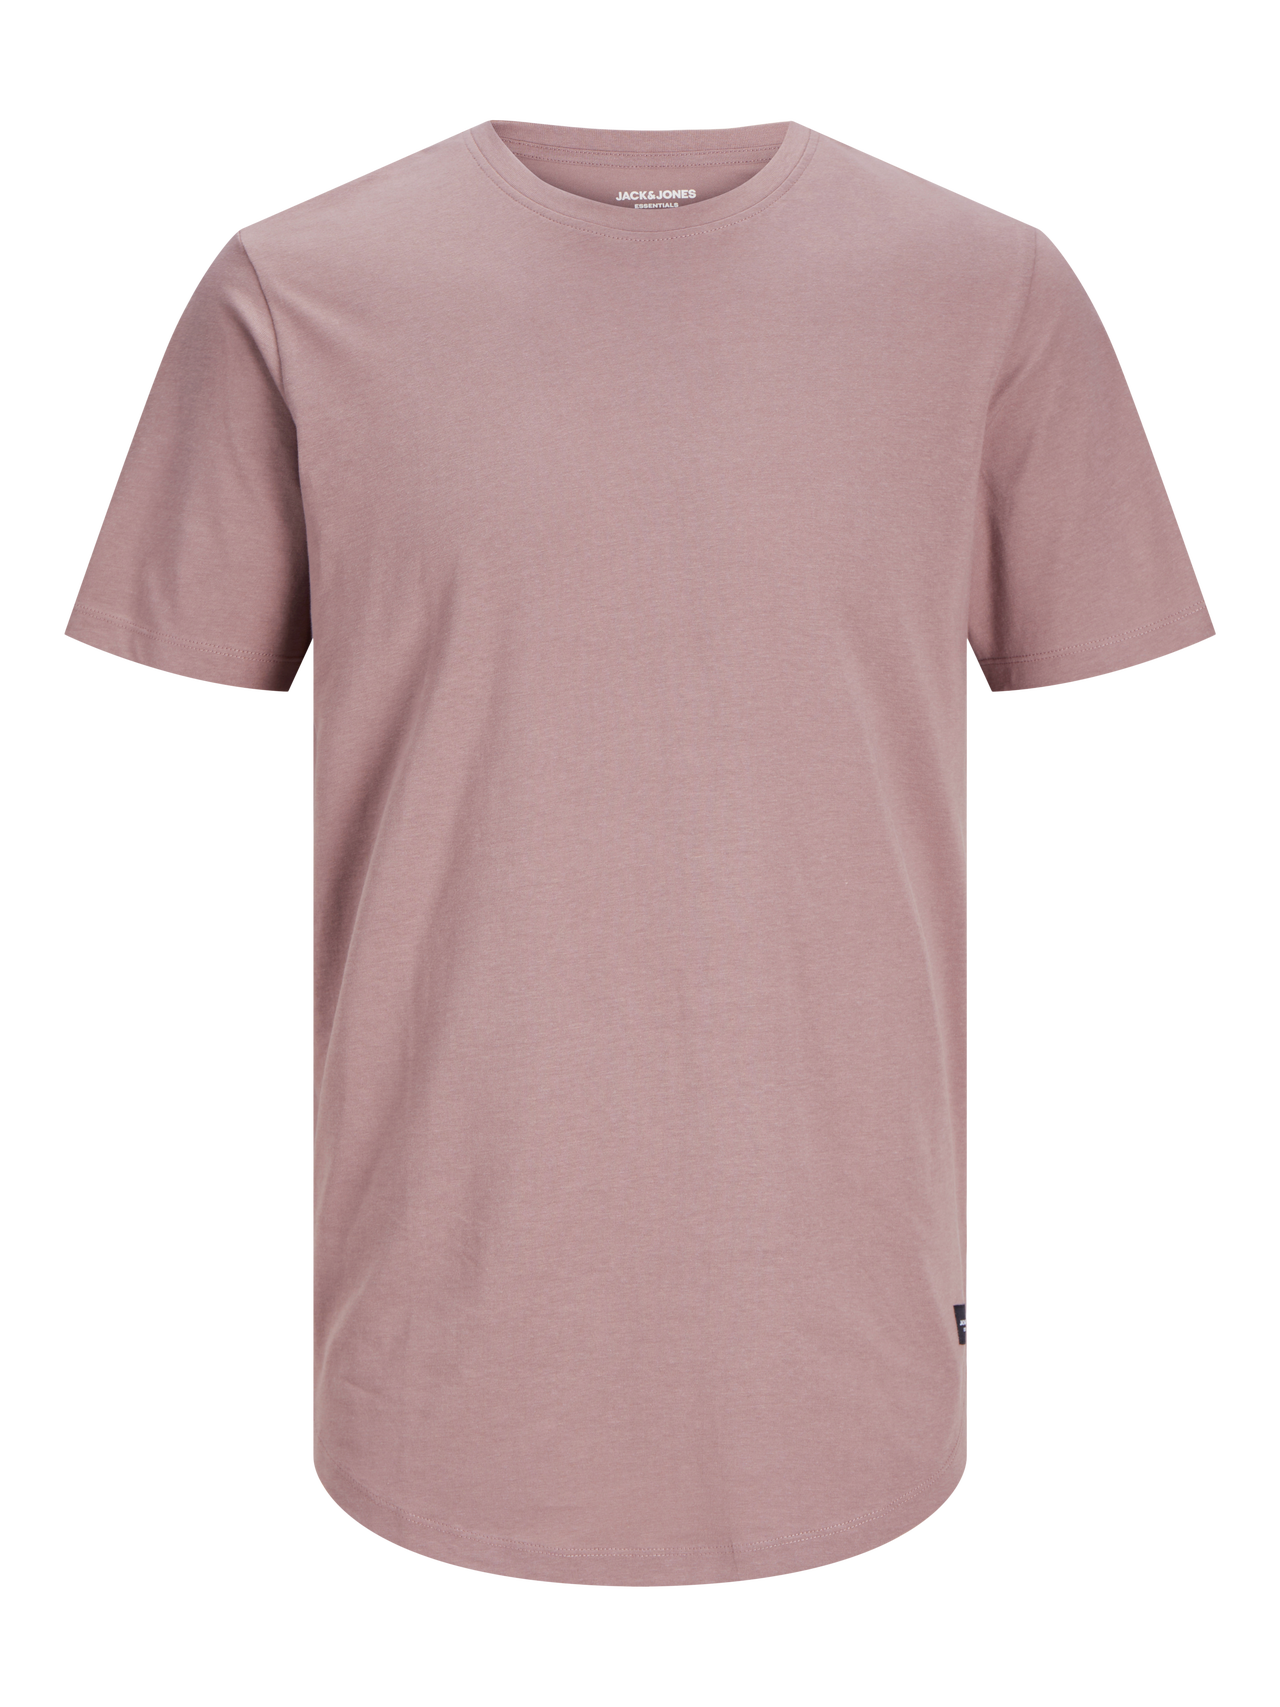 Jack & Jones Plain Crew neck T-shirt -Twilight Mauve - 12113648